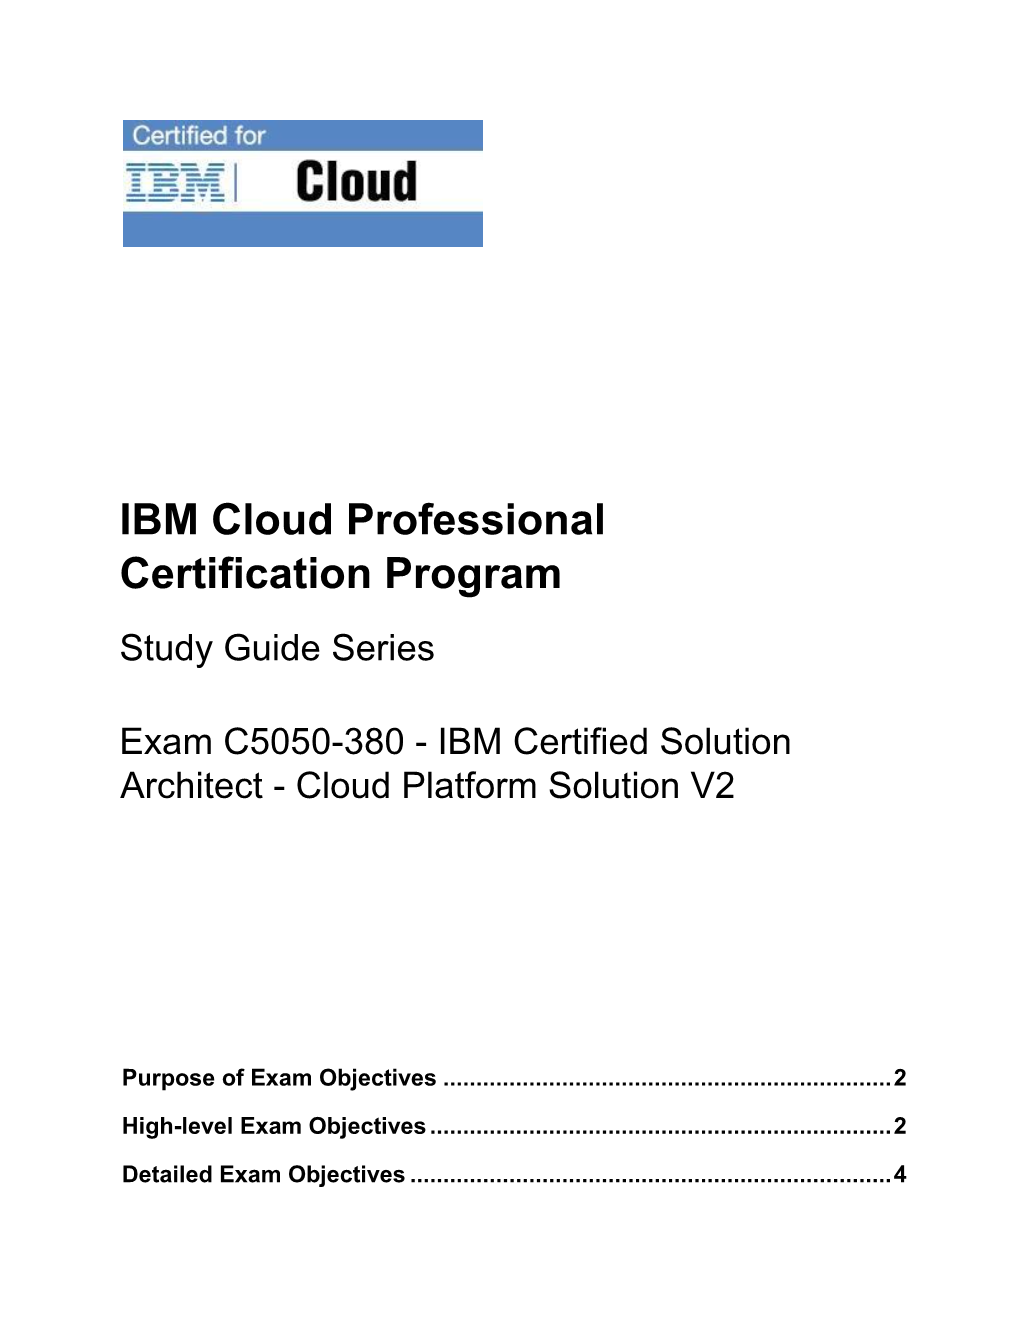 IBM Cloud Professional Certification Program